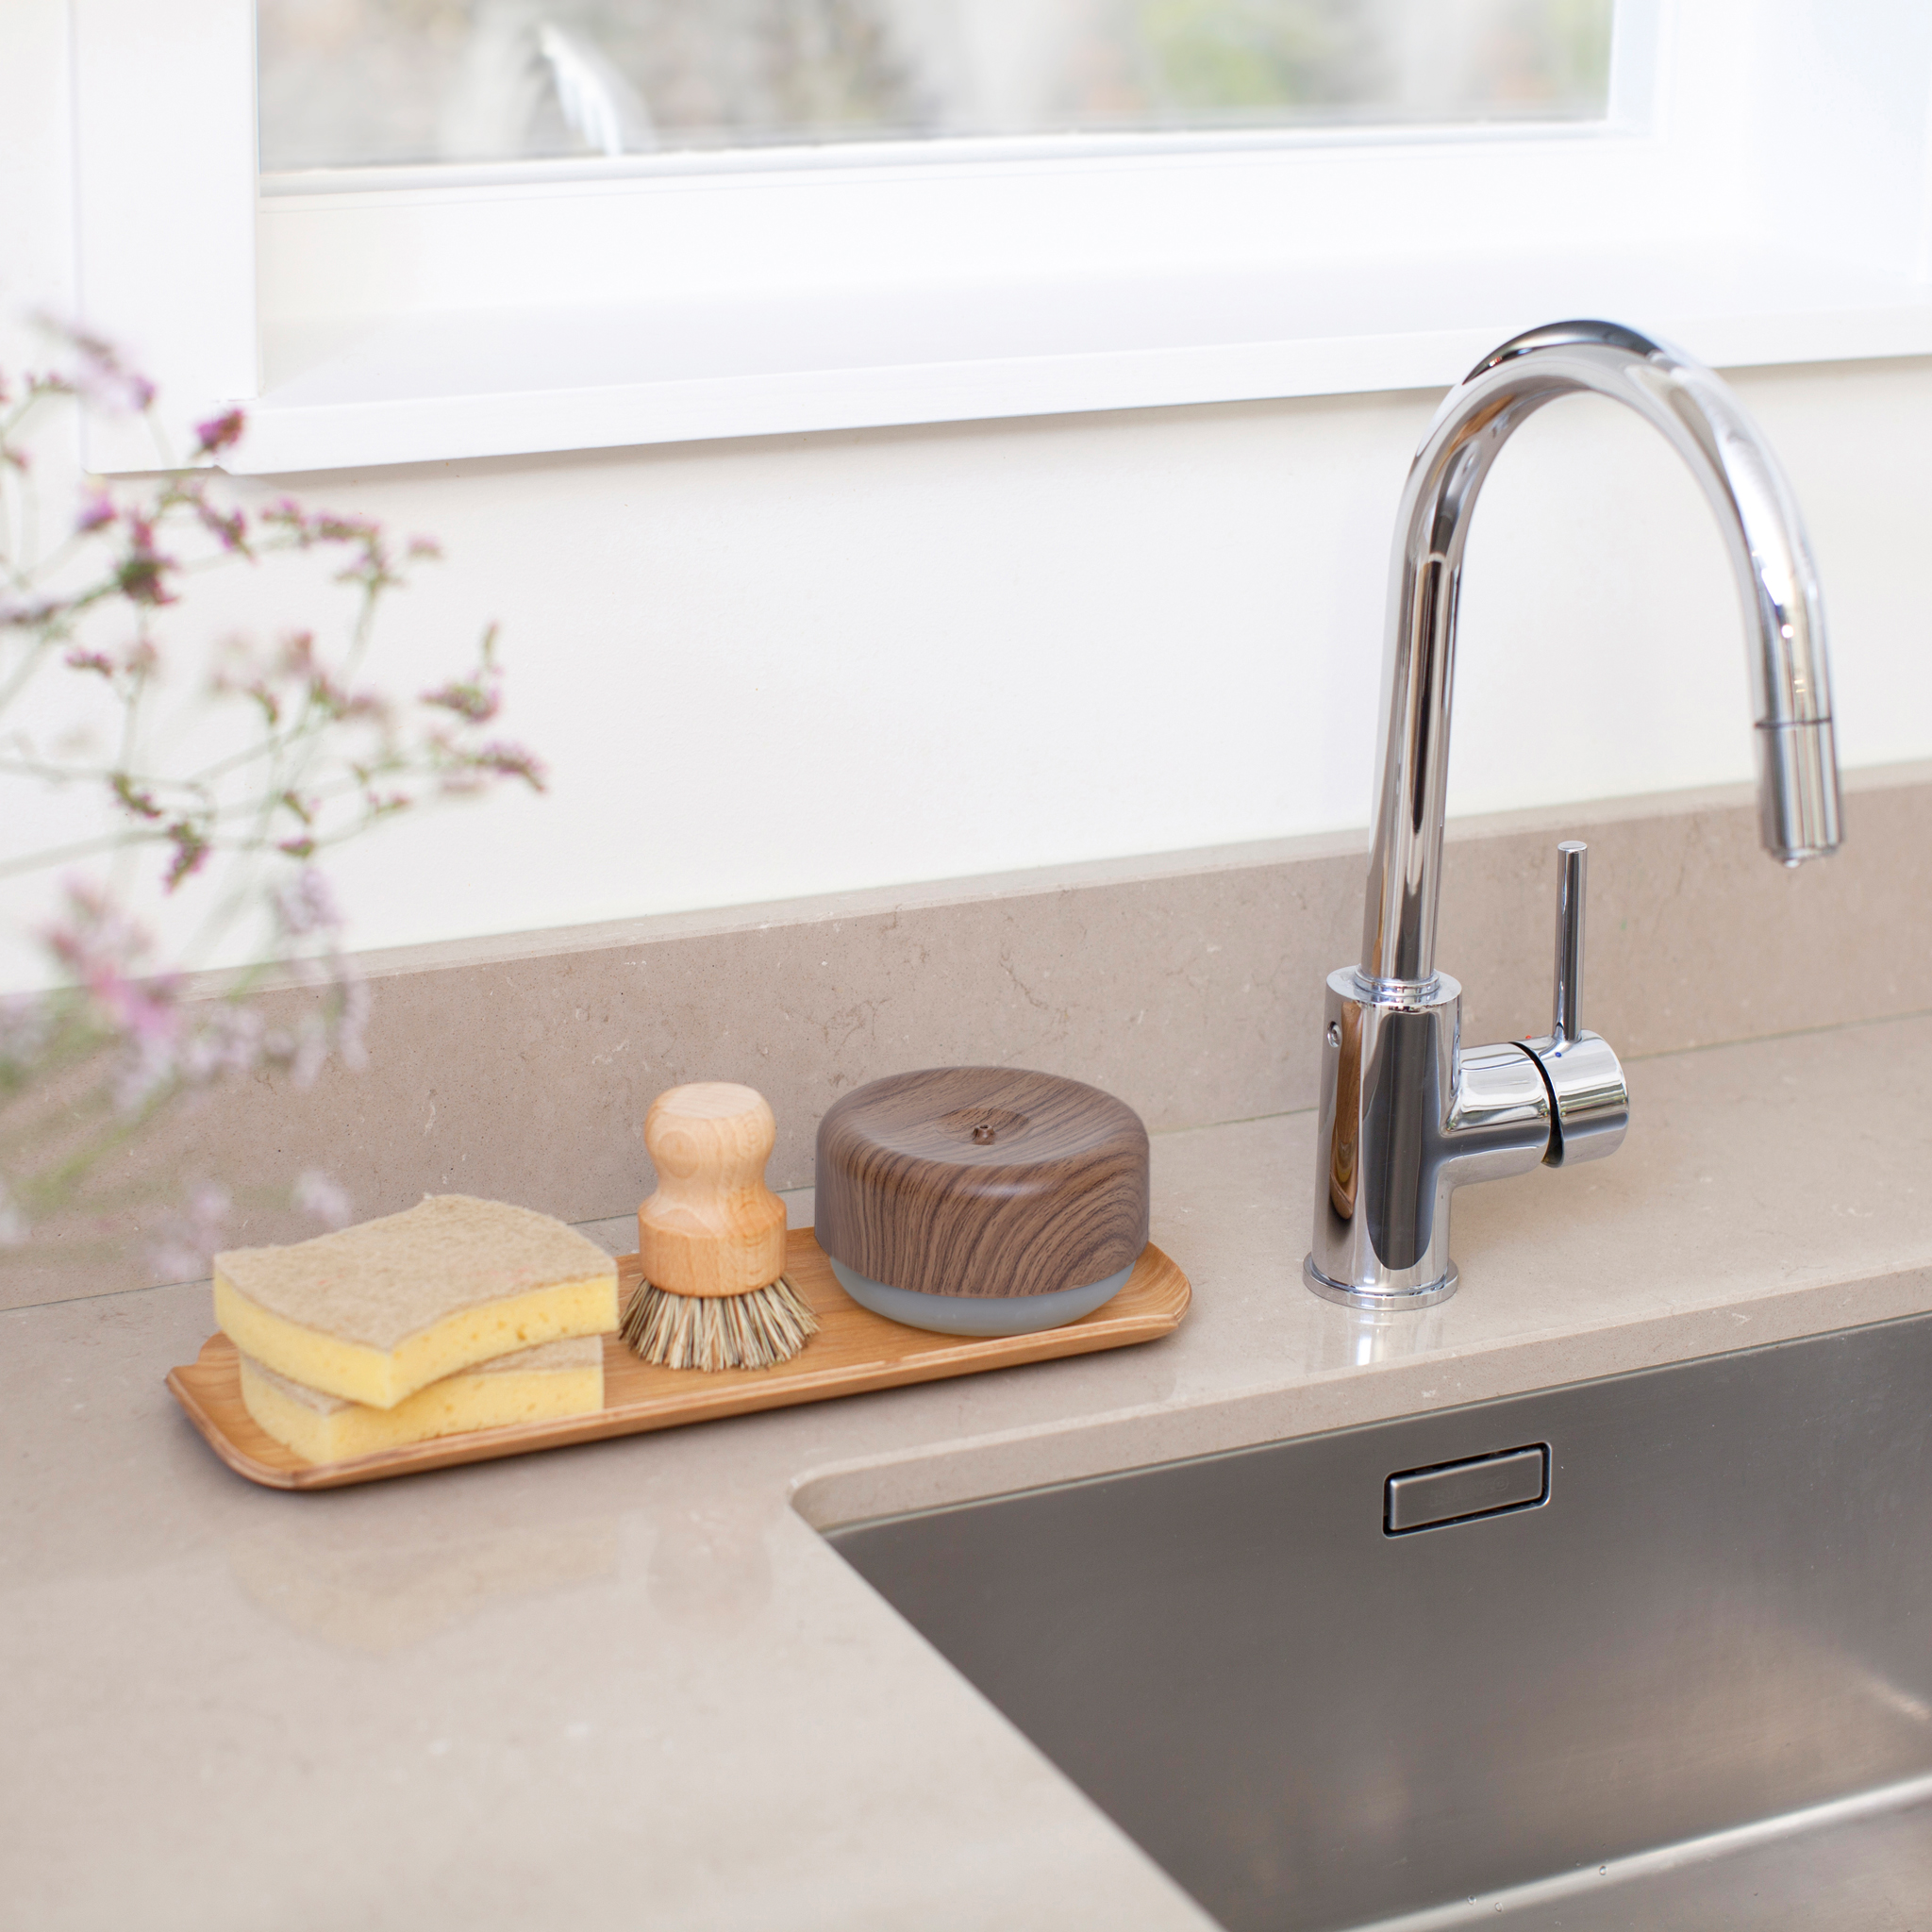 Dish Soap Dispenser Do-Dish™ - Dark Wood Decor/Light Gray. ø11x6,5 cm. PET, plastic, silicone - 9